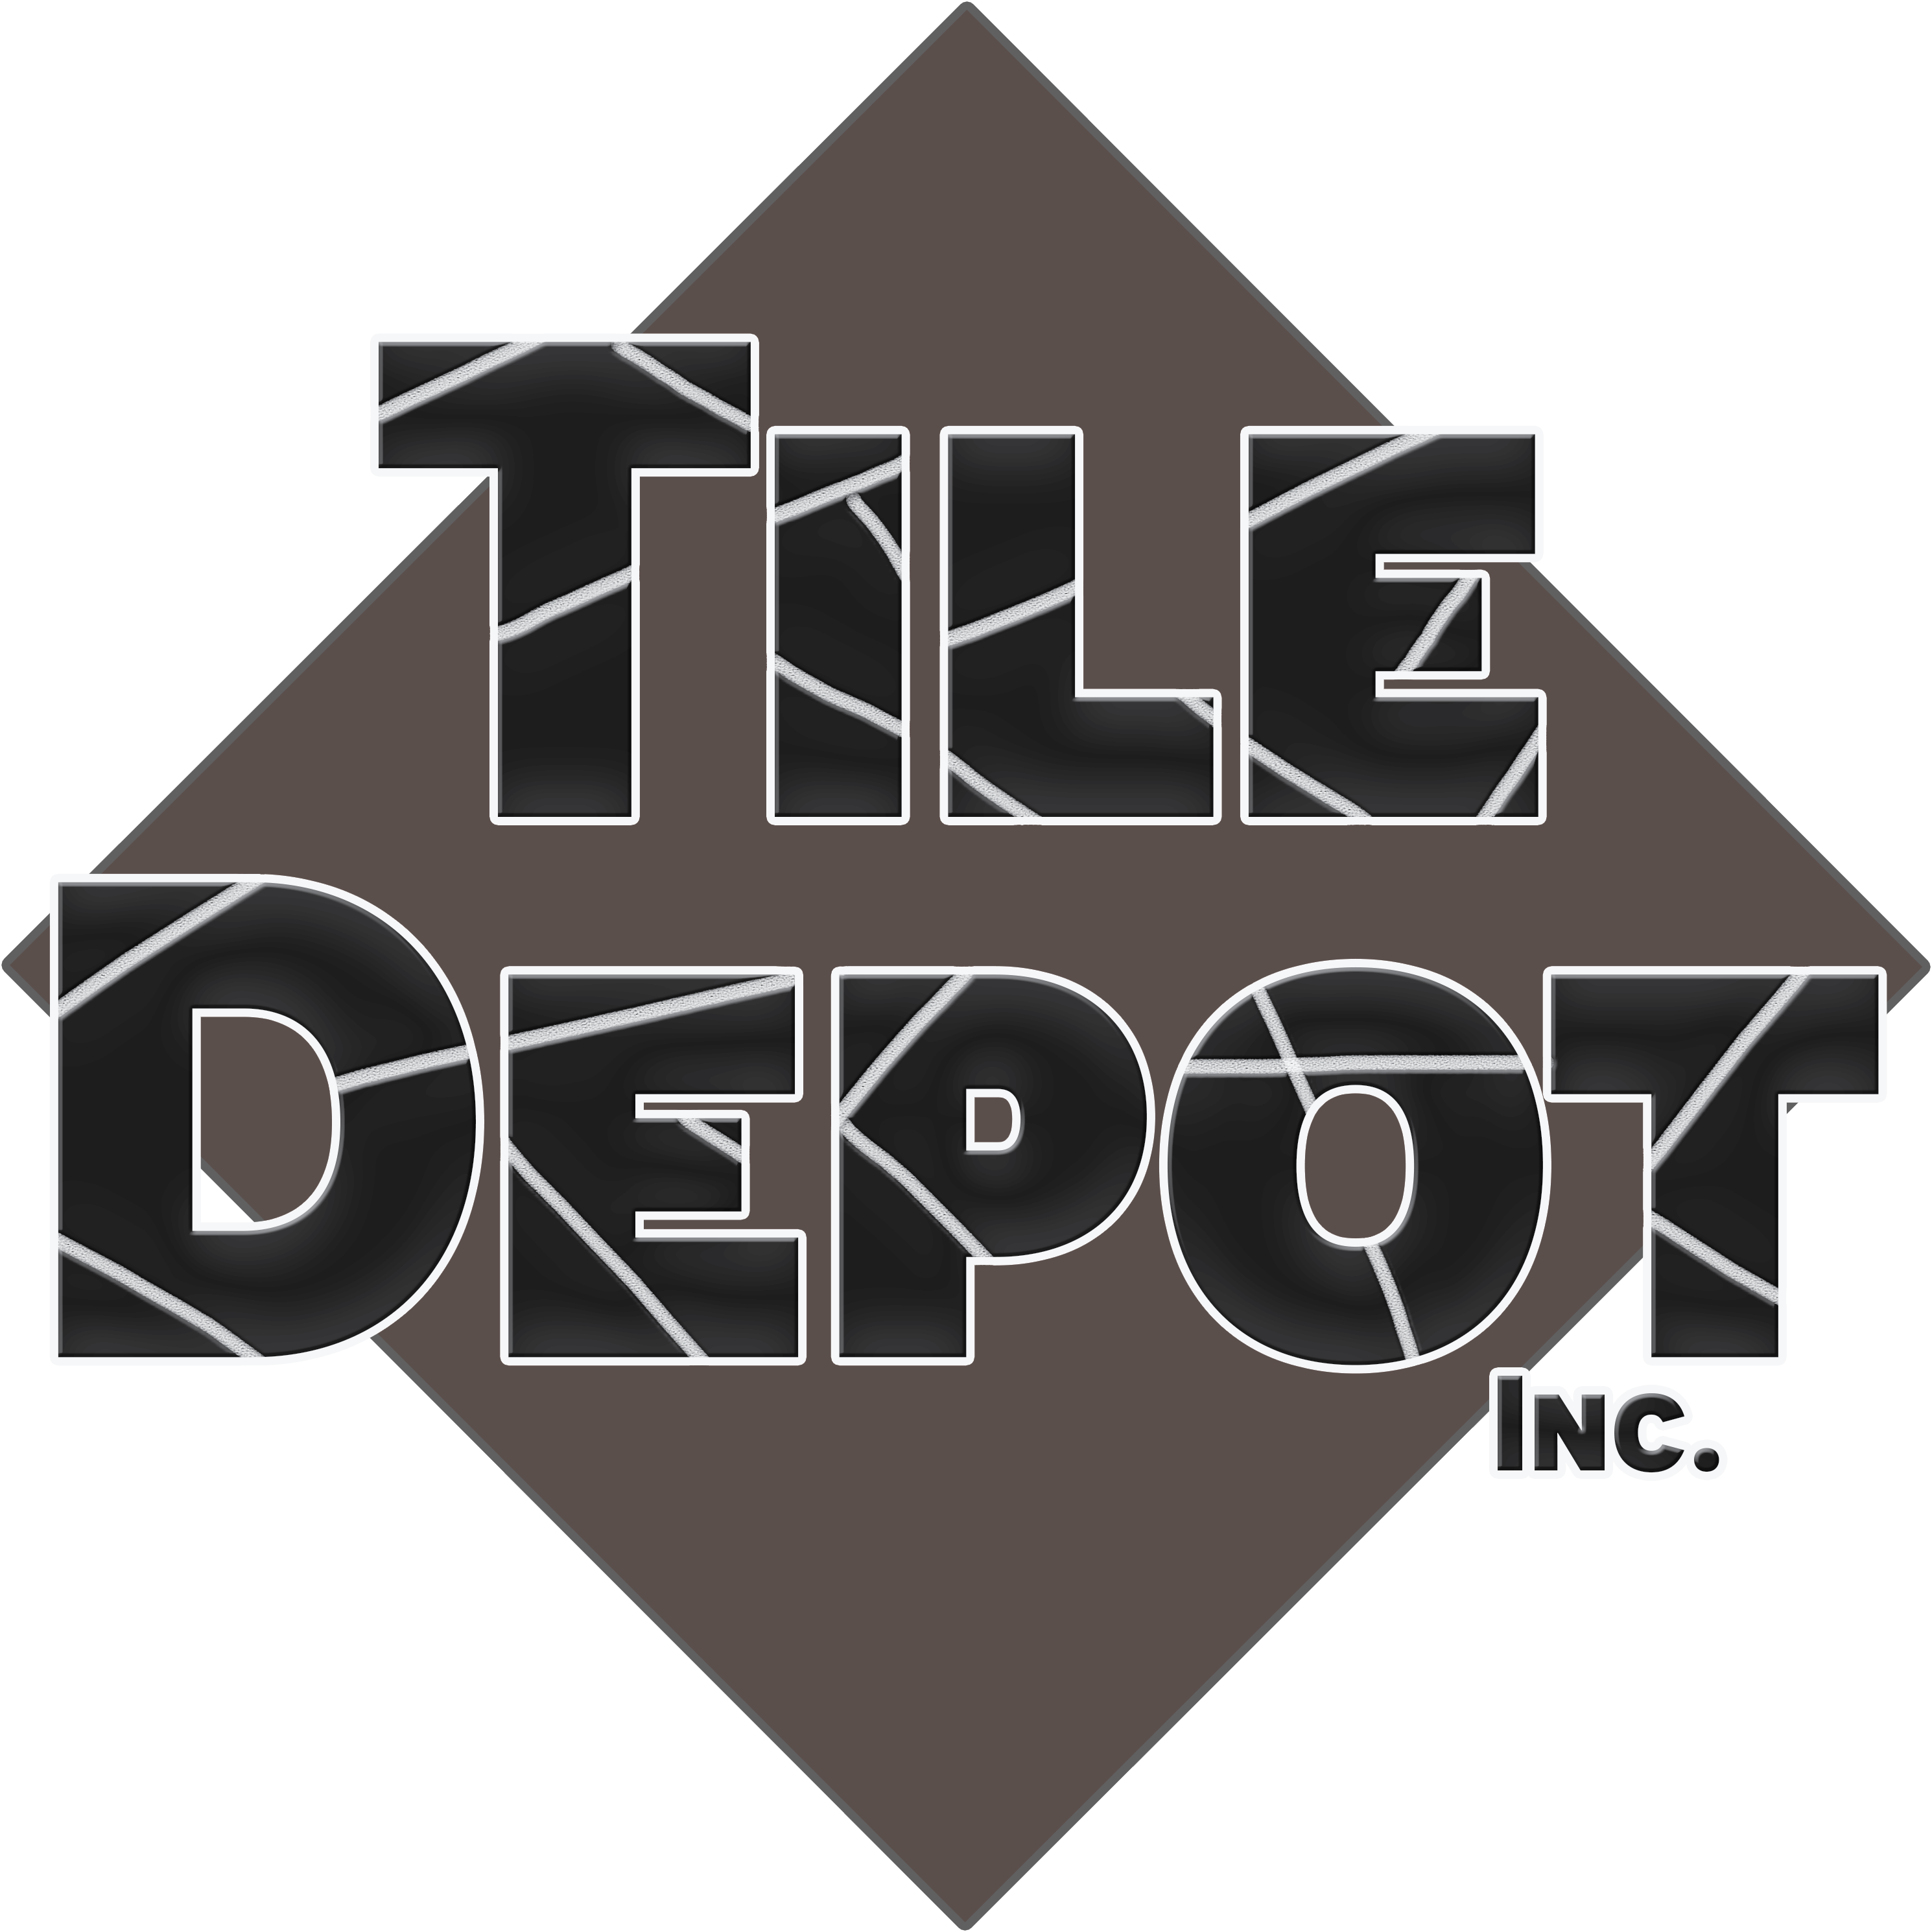 Tile Depot Inc